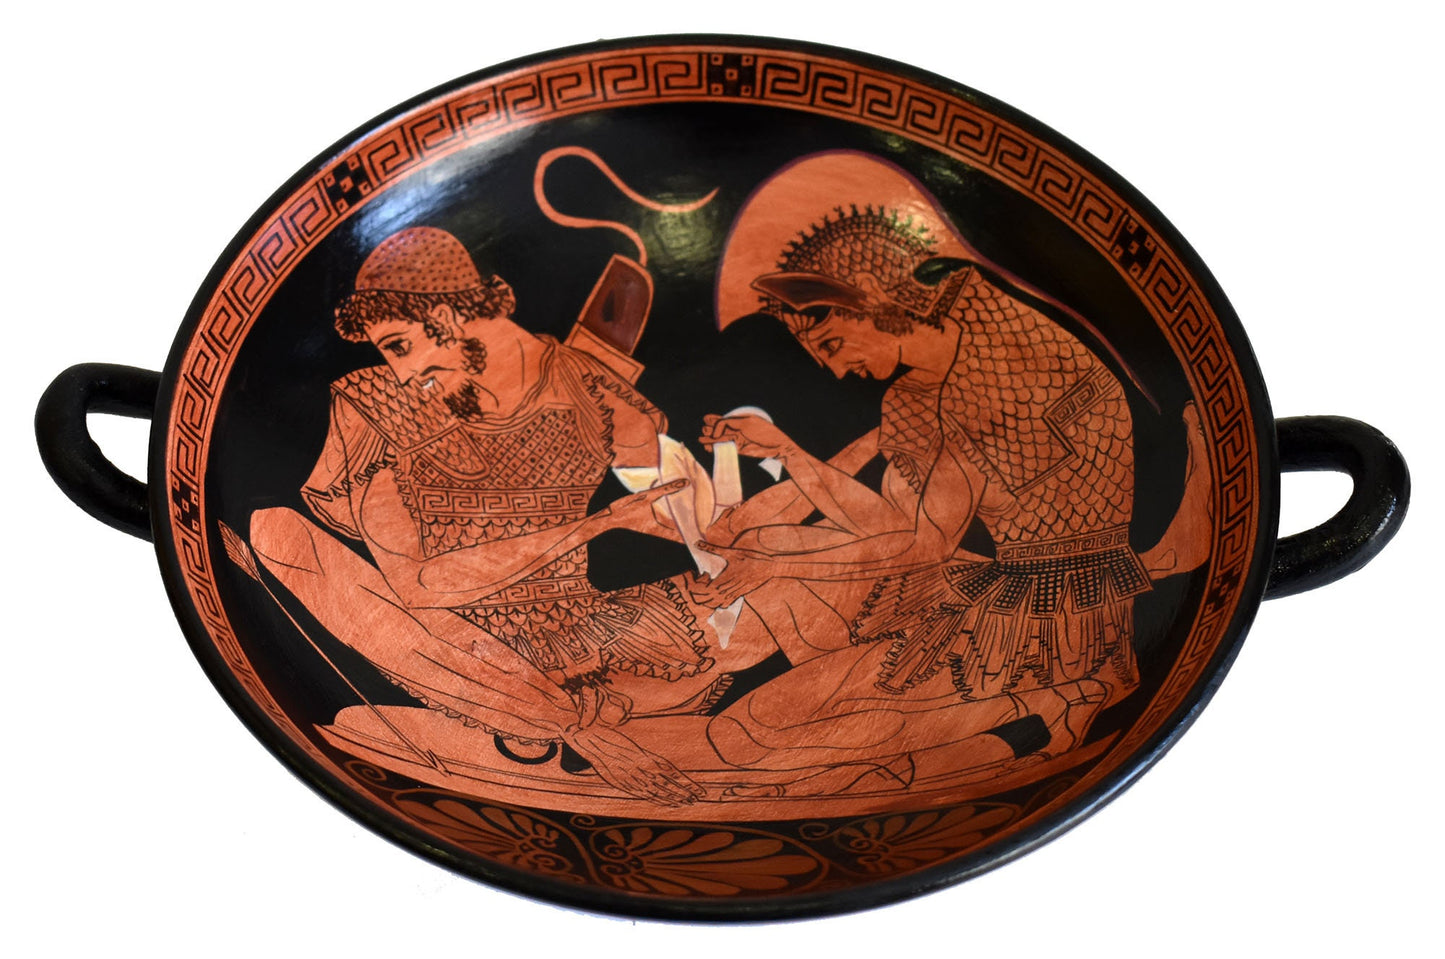 Achilles binding Patroclus wounds small Kylix - Homer, Iliad - Sosias Painter - Berlin Museum